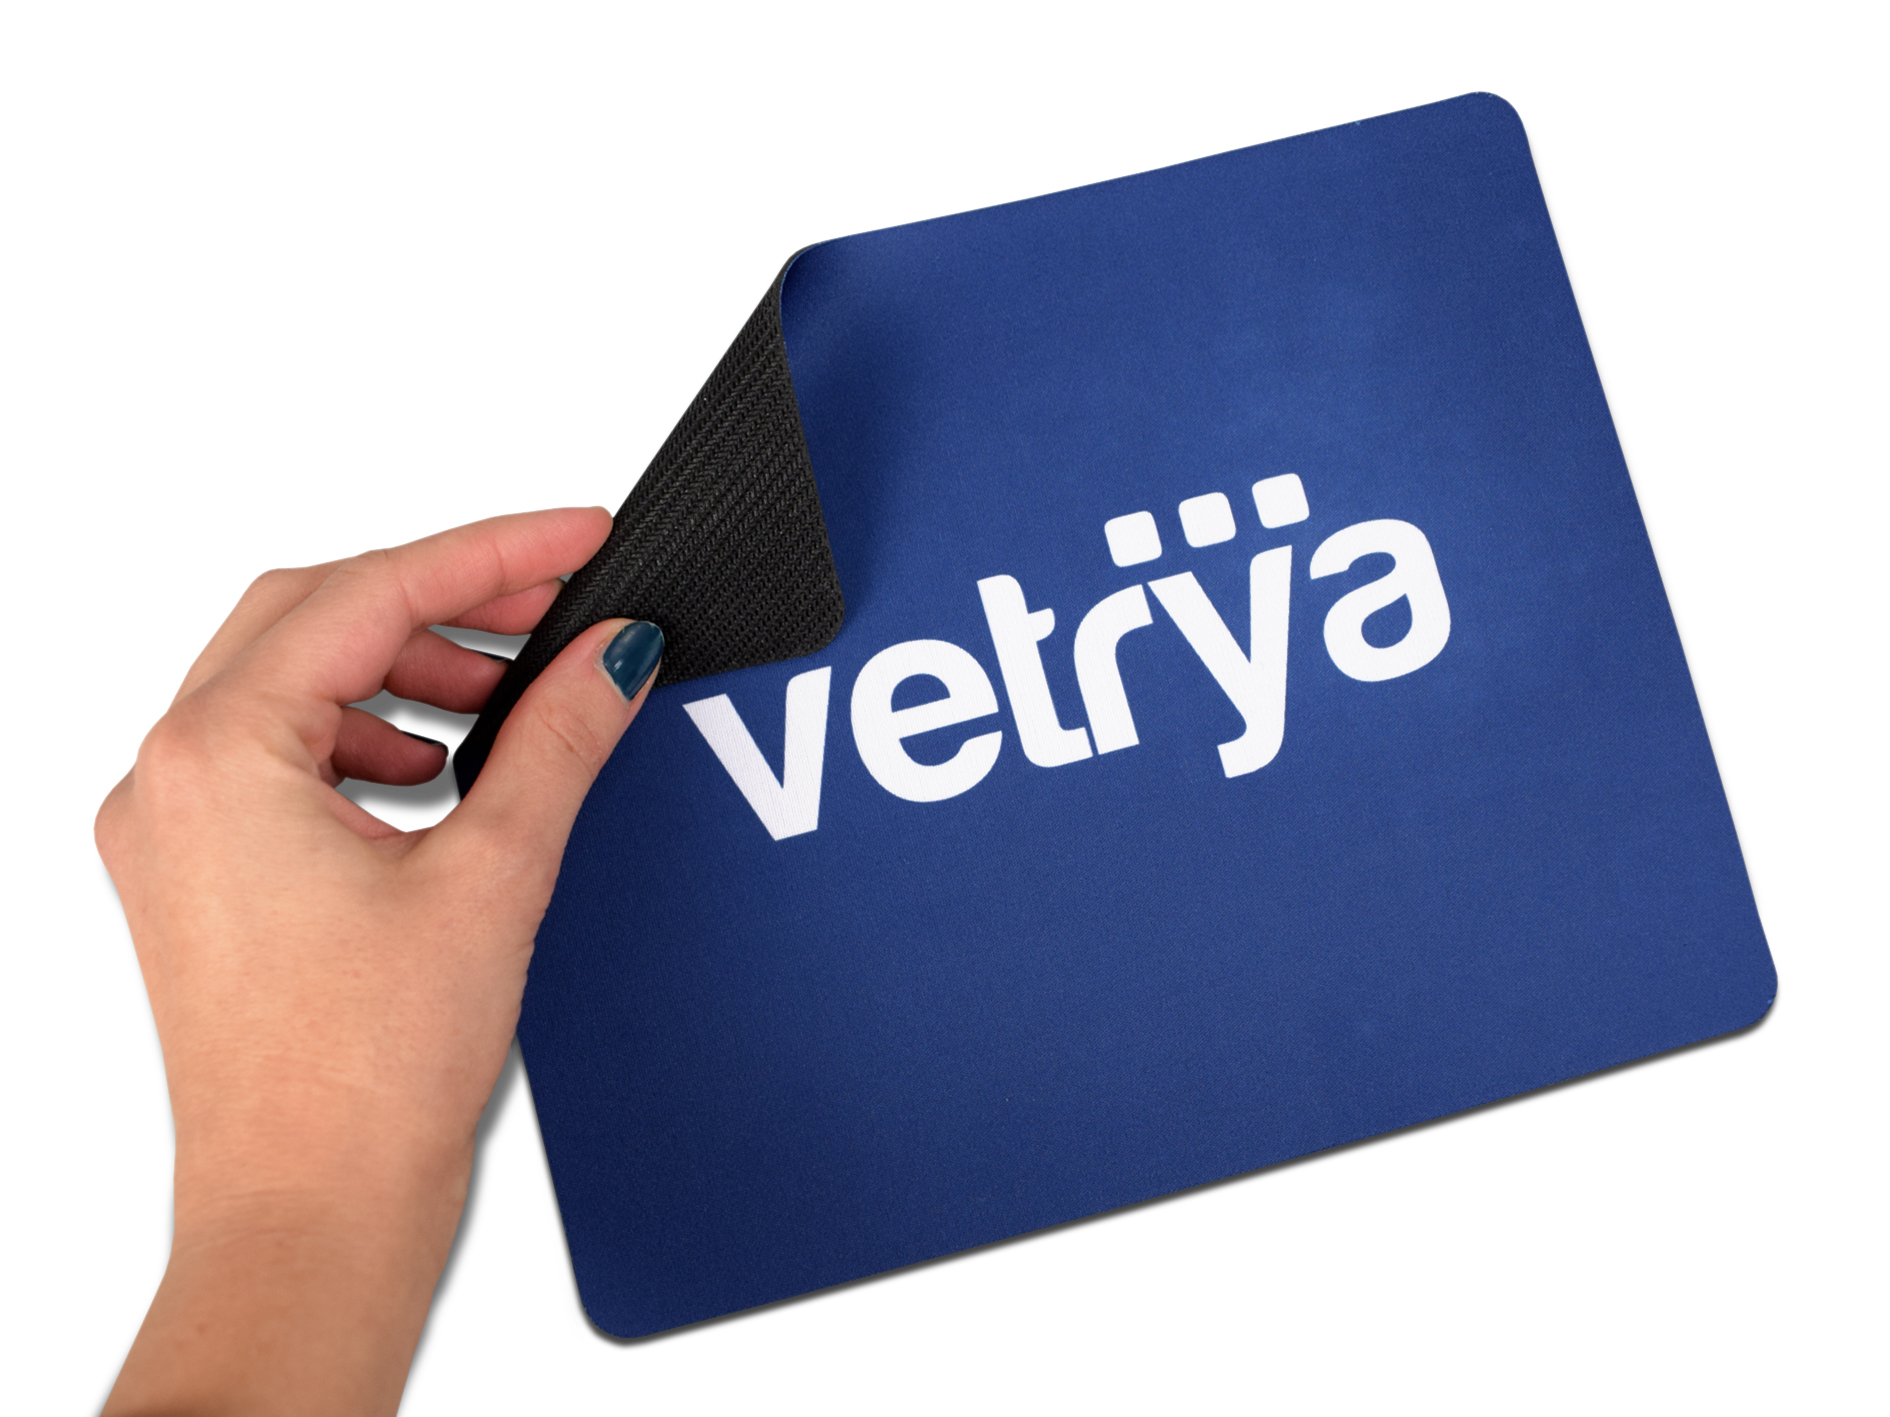 Mousepad personalizzato Vetrya